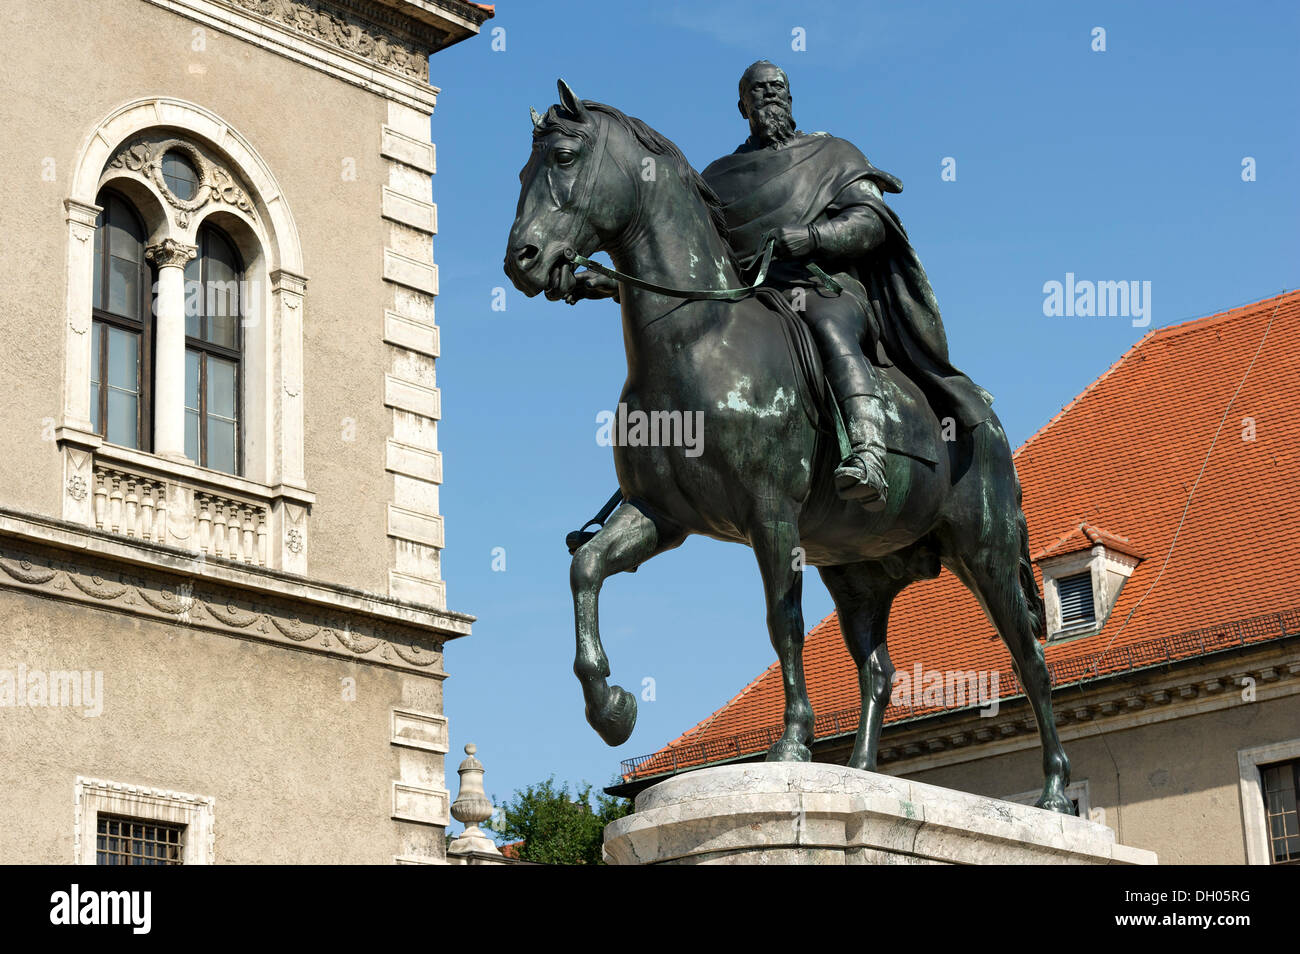 Statua equestre in bronzo di Prince Regent Luitpolt da Adolf von Hildebrand e Theodor Georgii, Museo Nazionale Bavarese Foto Stock